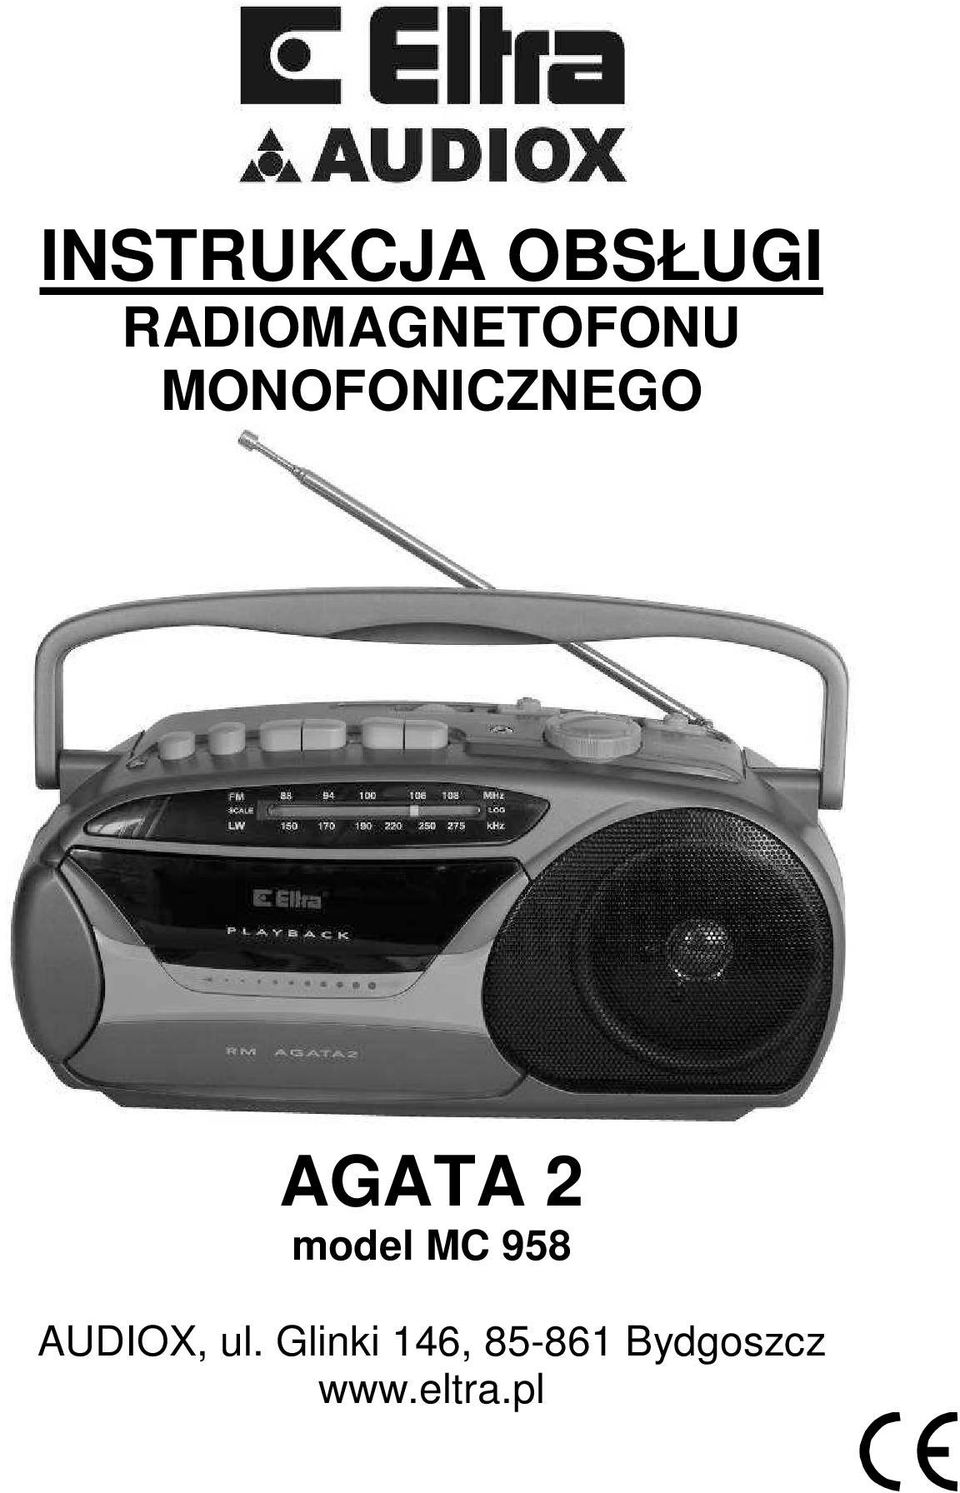 AGATA 2 model MC 958 AUDIOX, ul.